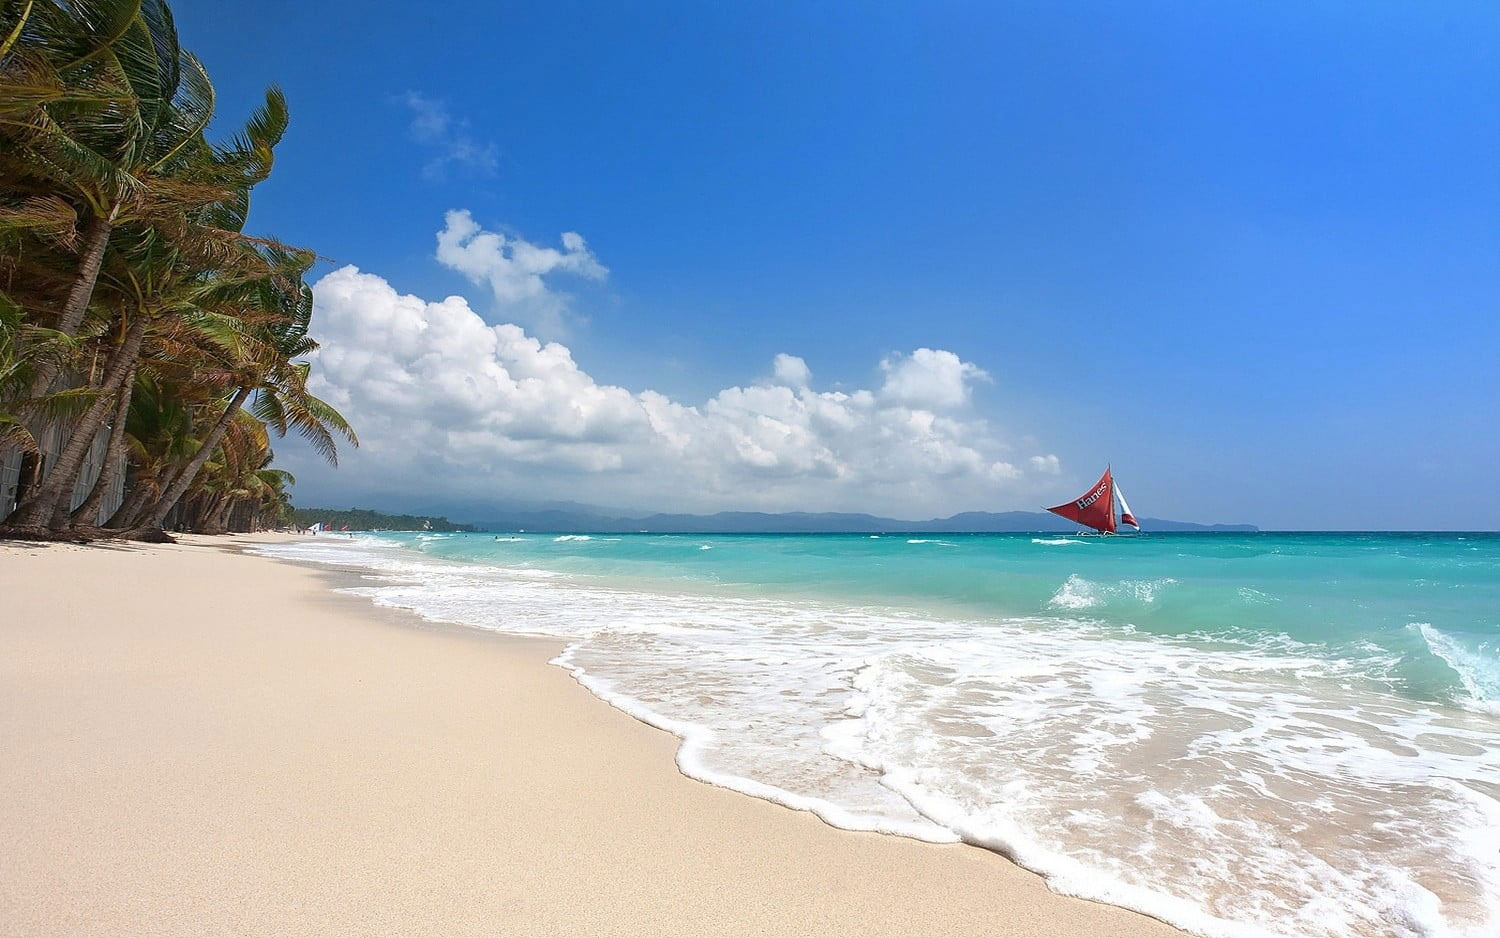 Coconut trees wallpaper, tropical, sailboats, beach, Boracay, island, Philippines